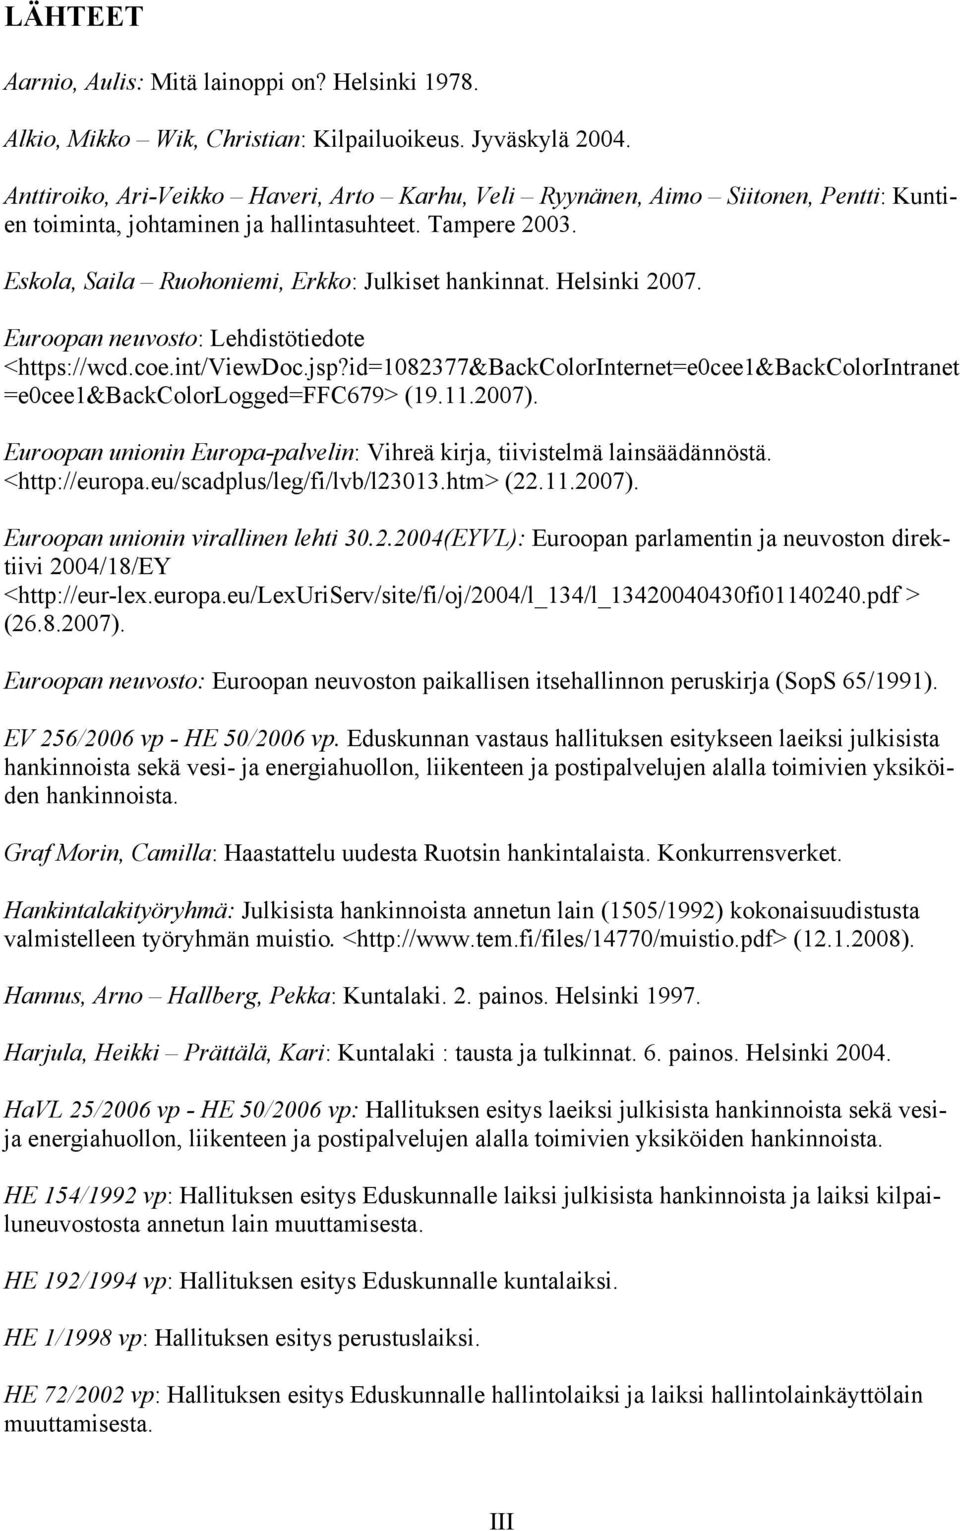 Helsinki 2007. Euroopan neuvosto: Lehdistötiedote <https://wcd.coe.int/viewdoc.jsp?id=1082377&backcolorinternet=e0cee1&backcolorintranet =e0cee1&backcolorlogged=ffc679> (19.11.2007).